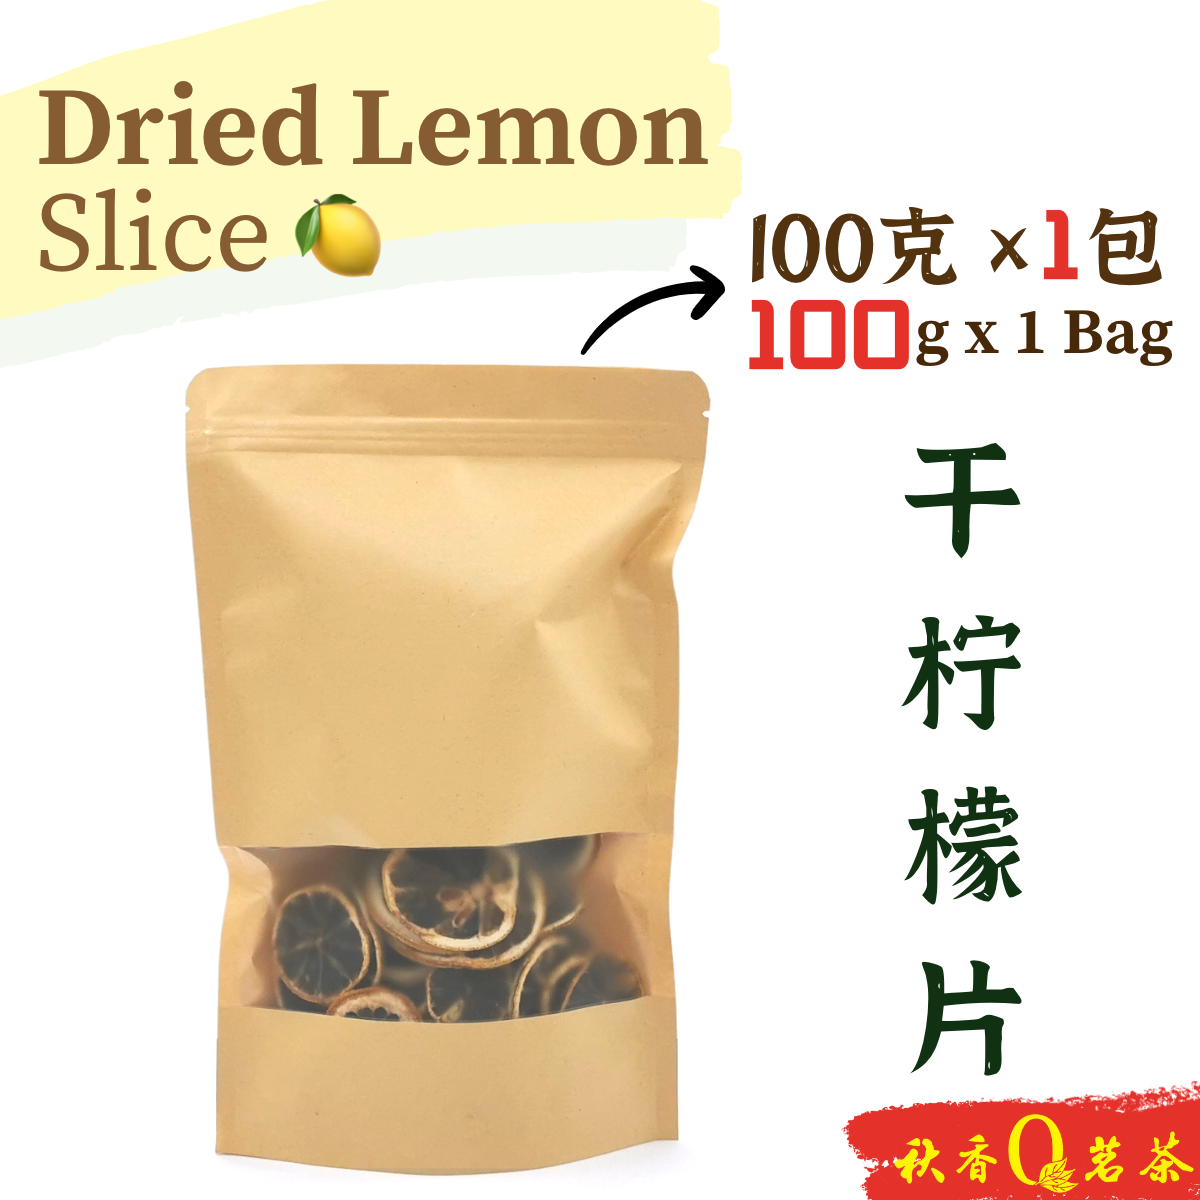 干柠檬片 Dried Lemon Slide (100g)｜【花草茶 Herbal tea】